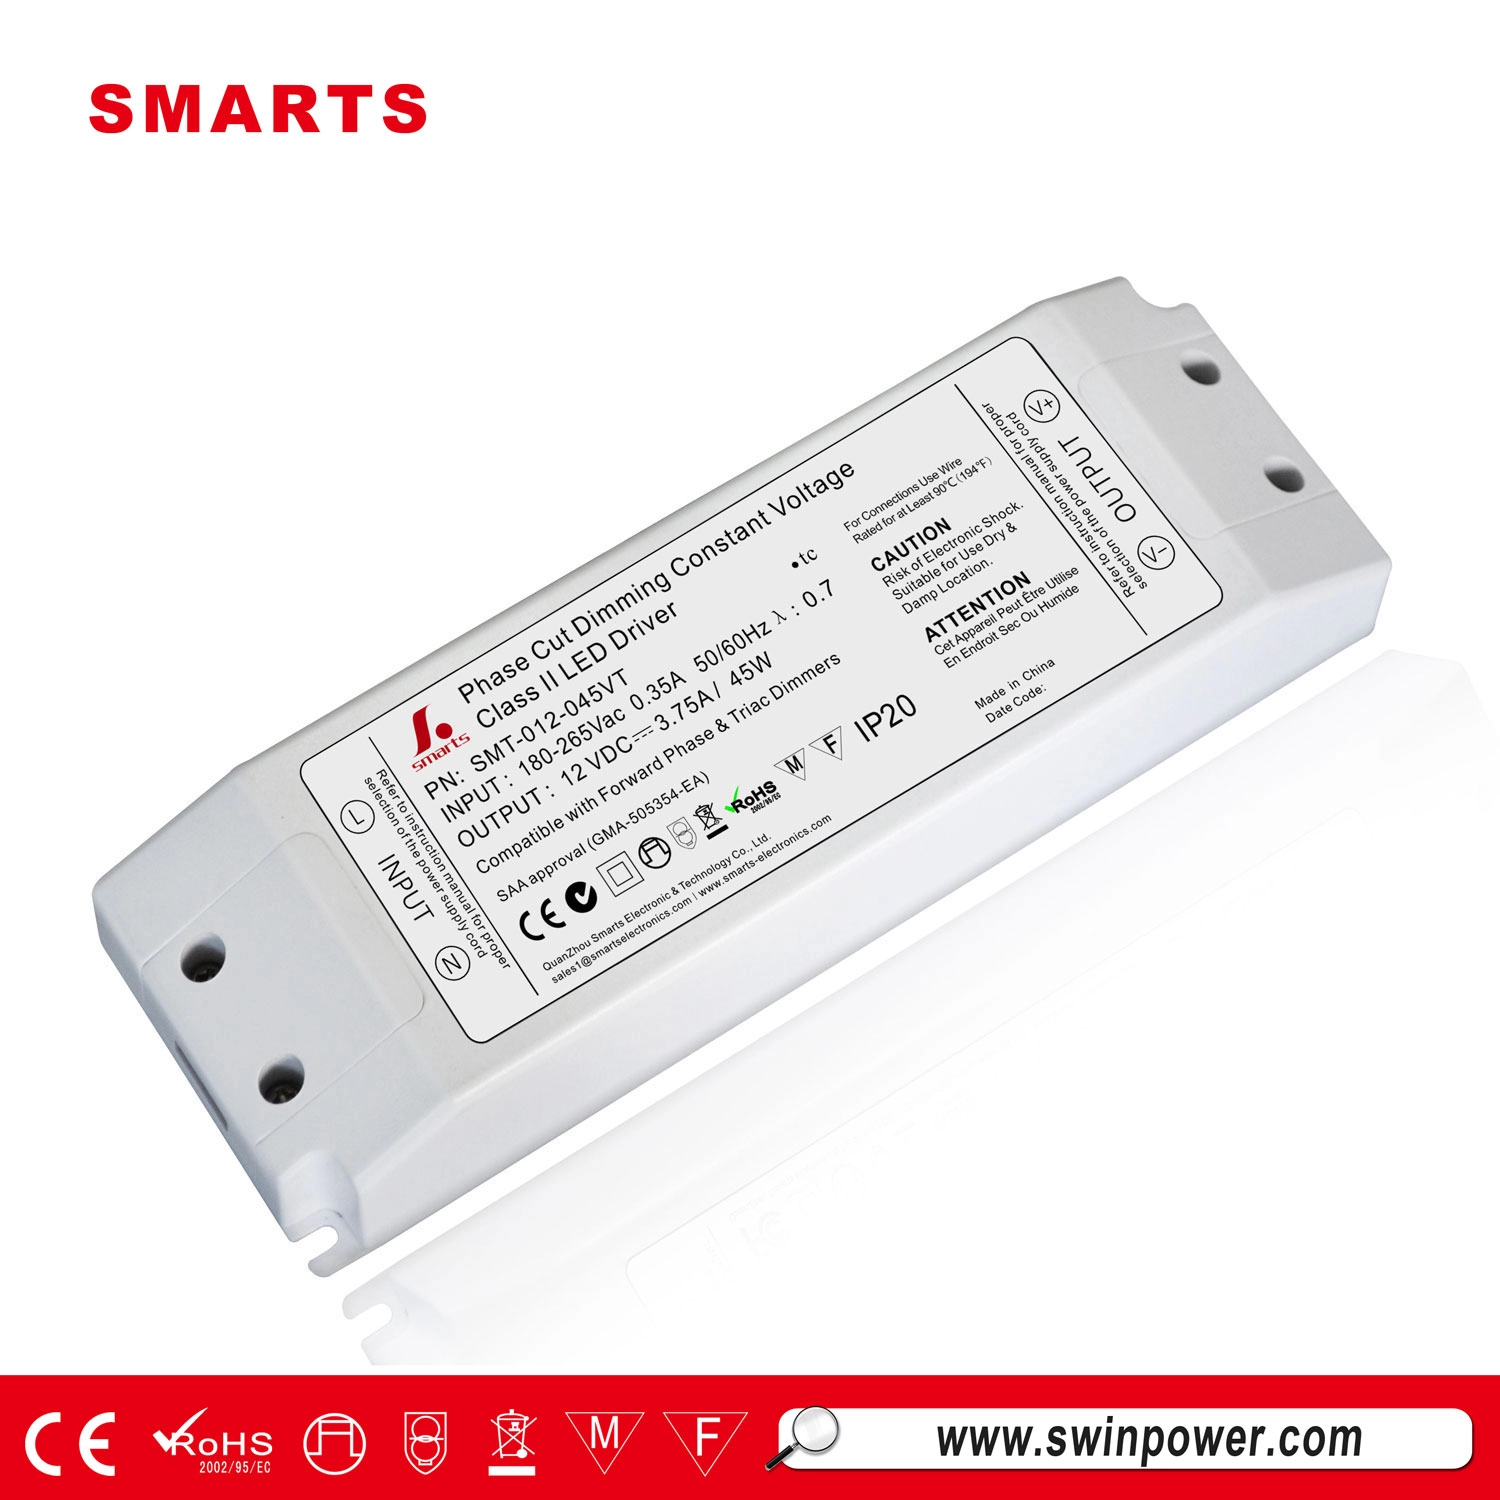 Fuente de alimentación de luz de tira led de voltaje constante saa de controlador led regulable de 45w 12vdc barata